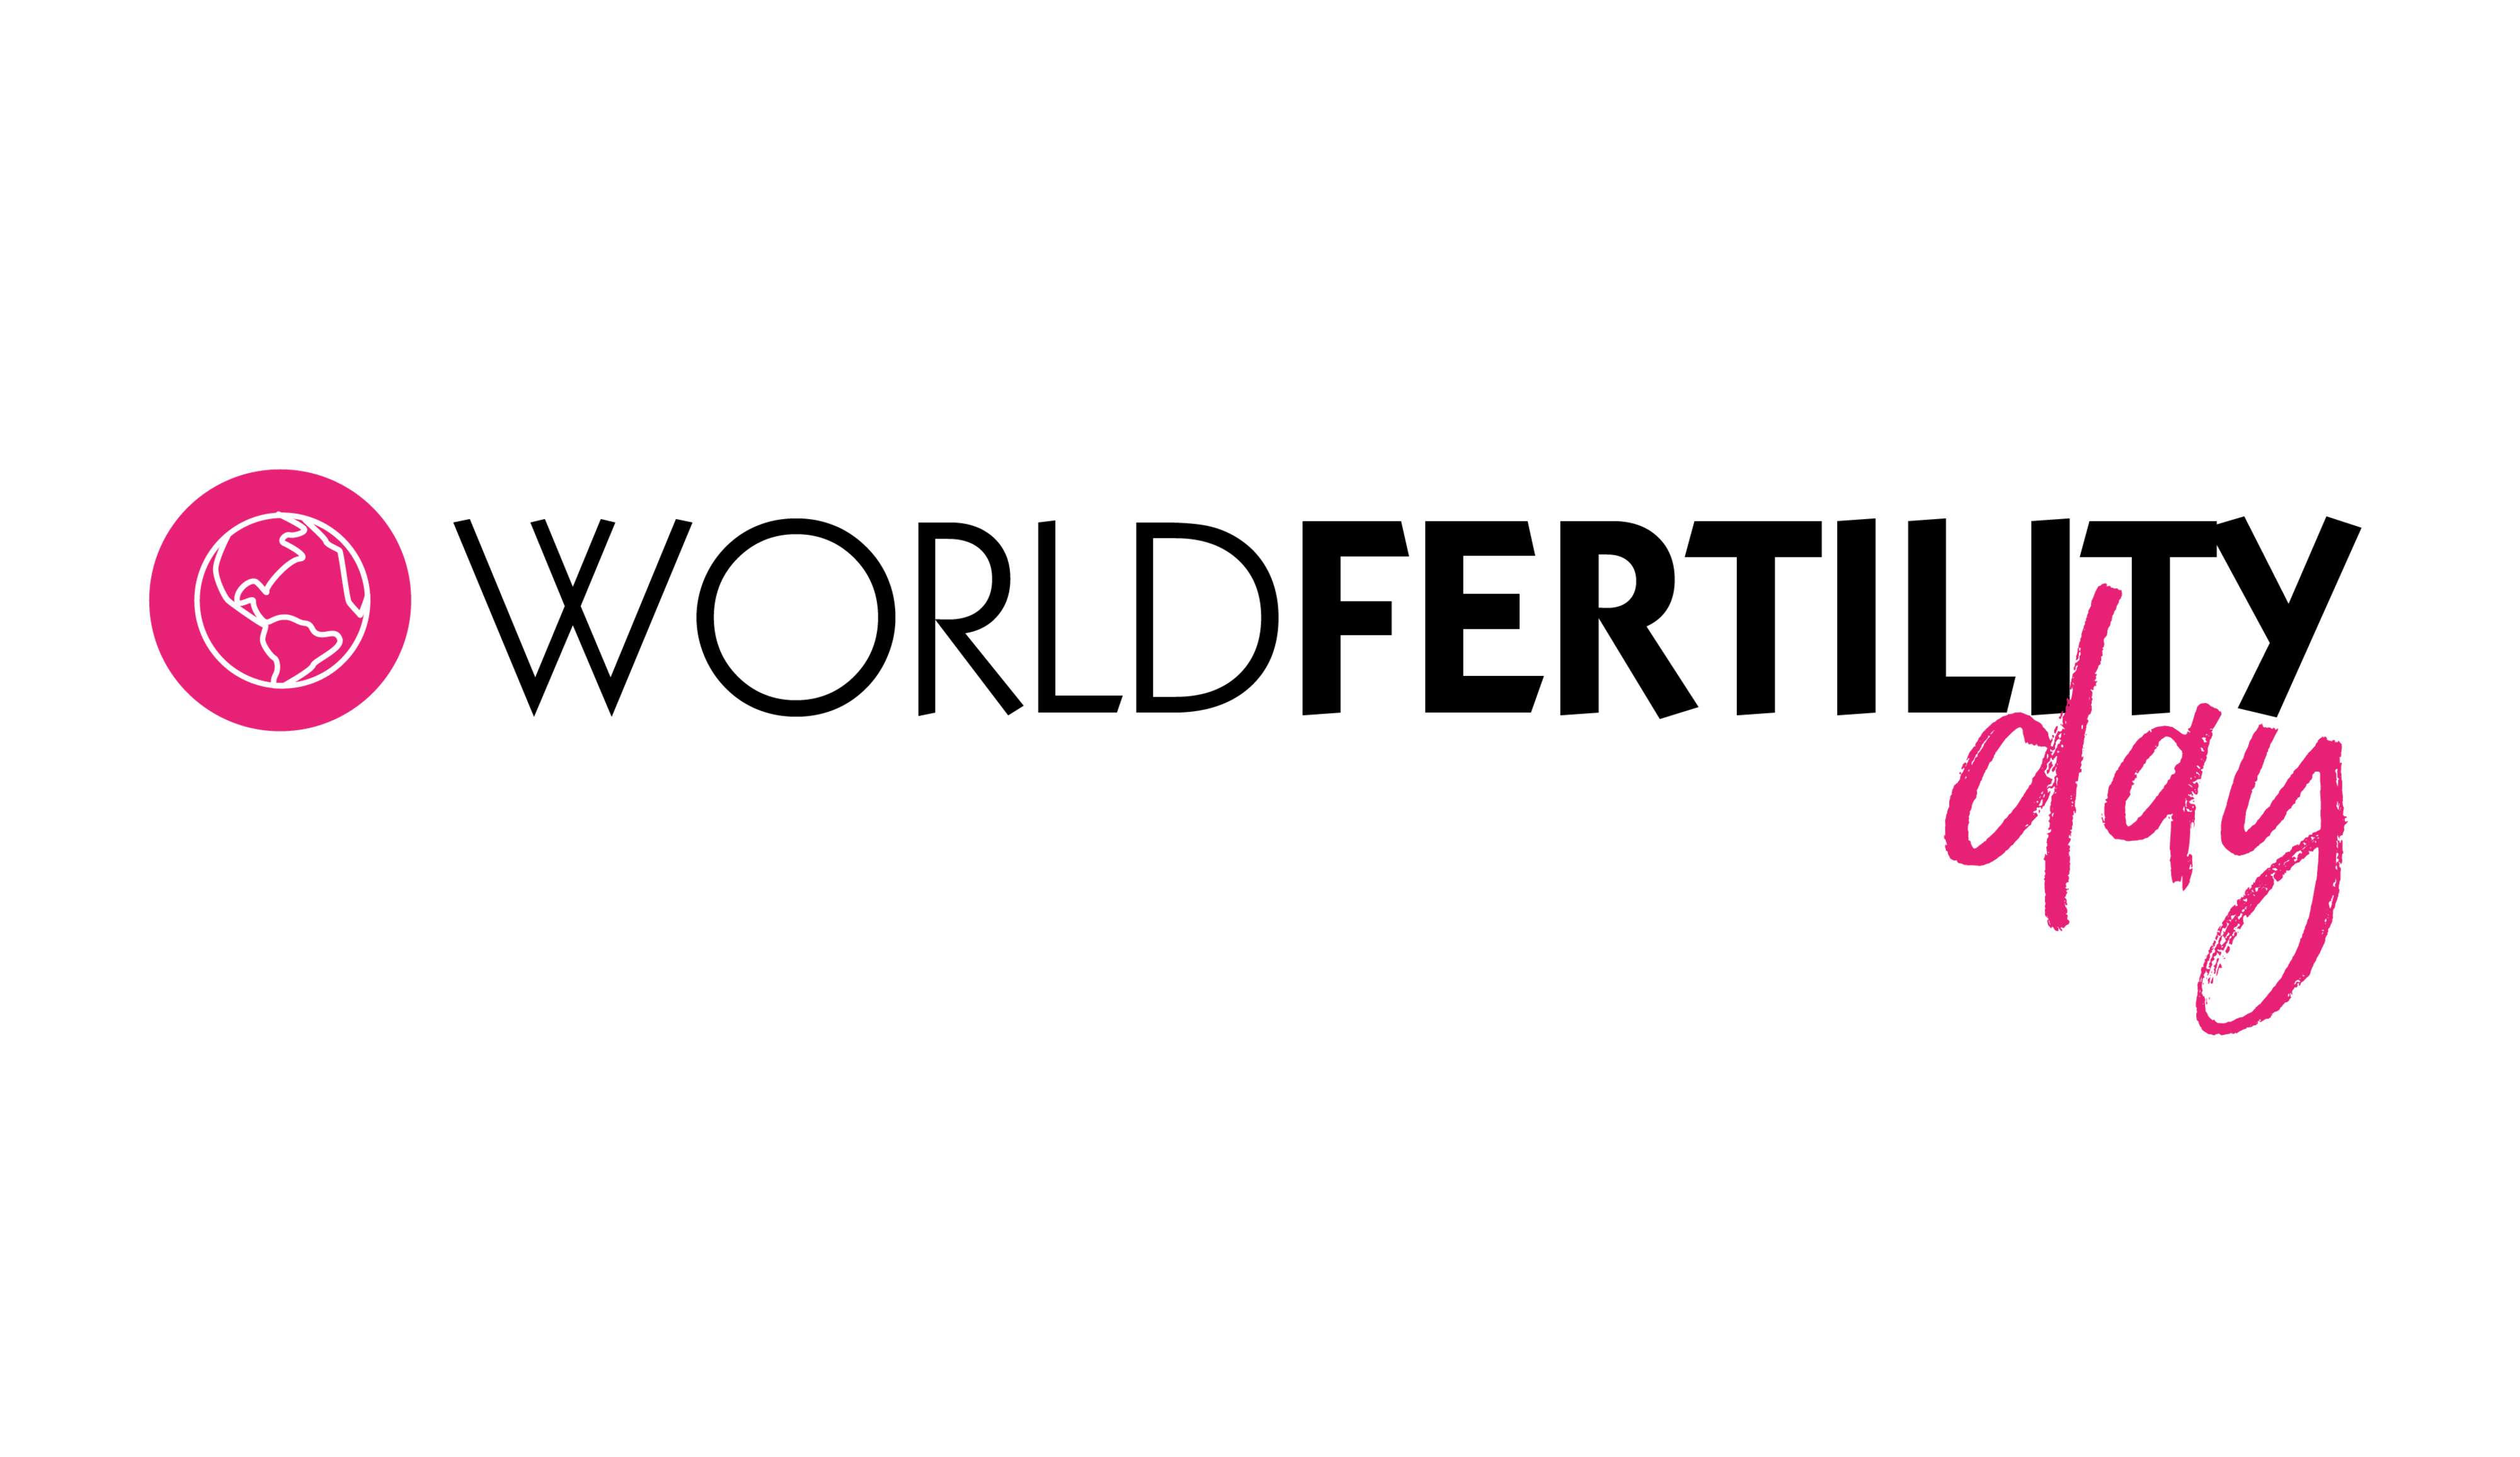 World Fertility Day